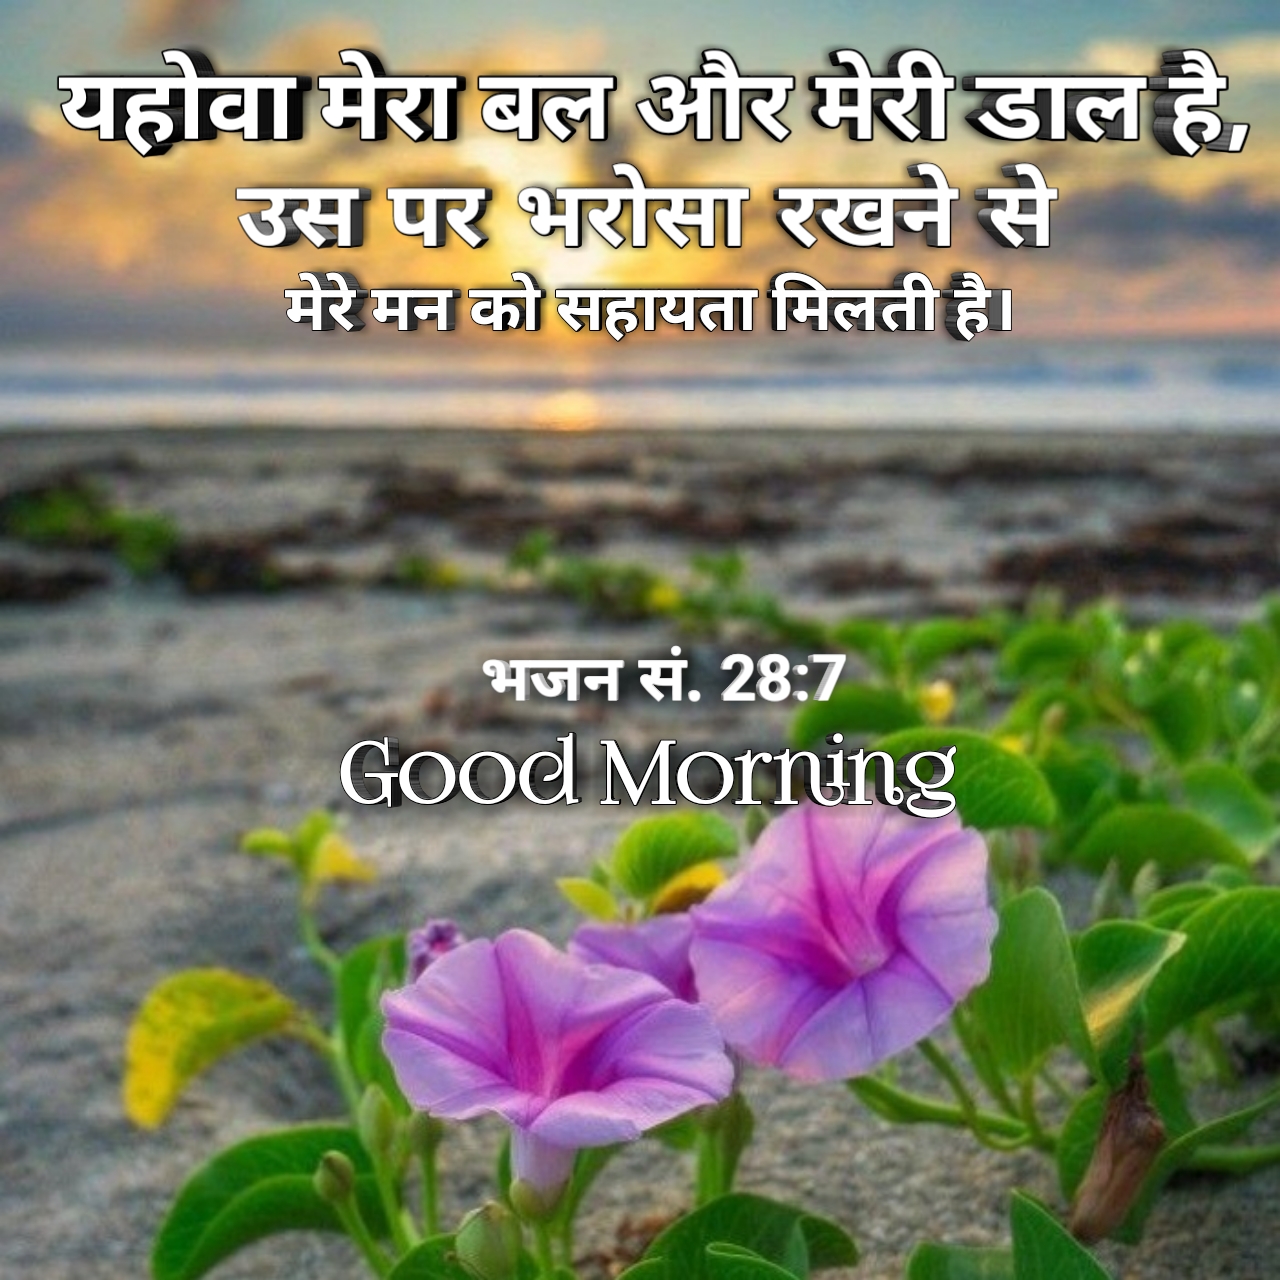 Good Morning Bible Verse Quotes Images In Hindi - Click Bible